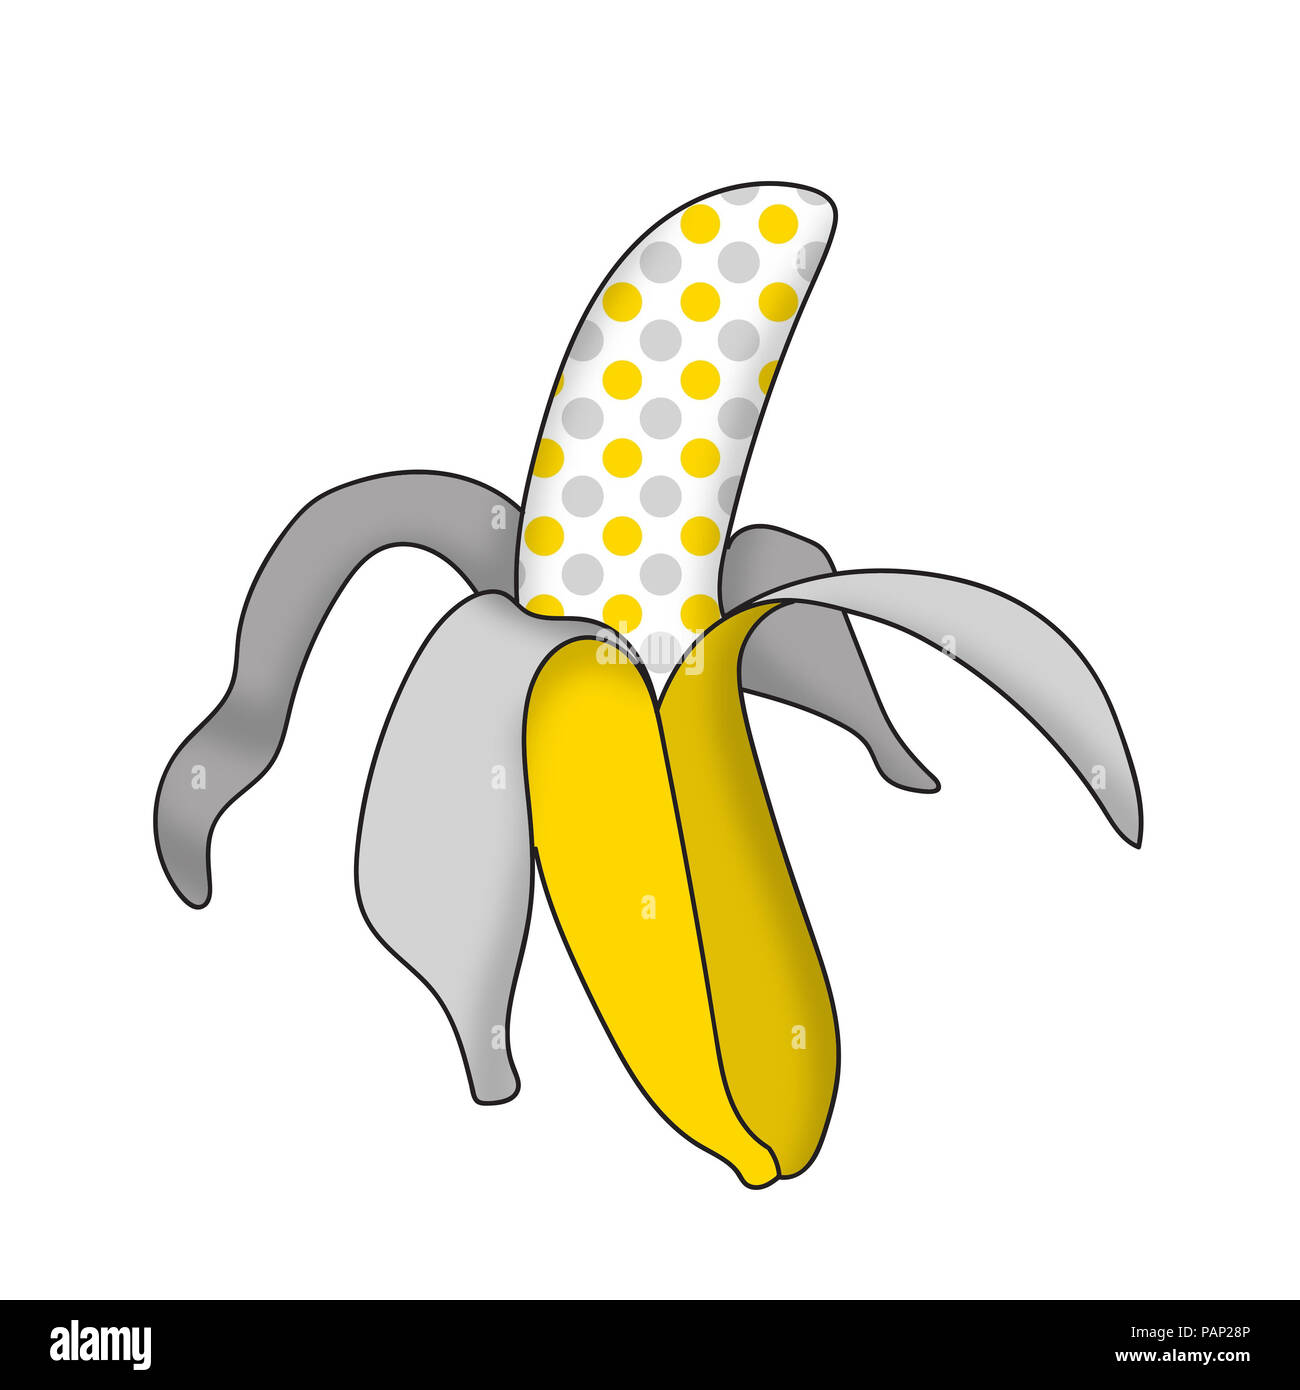 Stylized illustration of a colorful peeled banana with polka dot flesh. Stock Photo